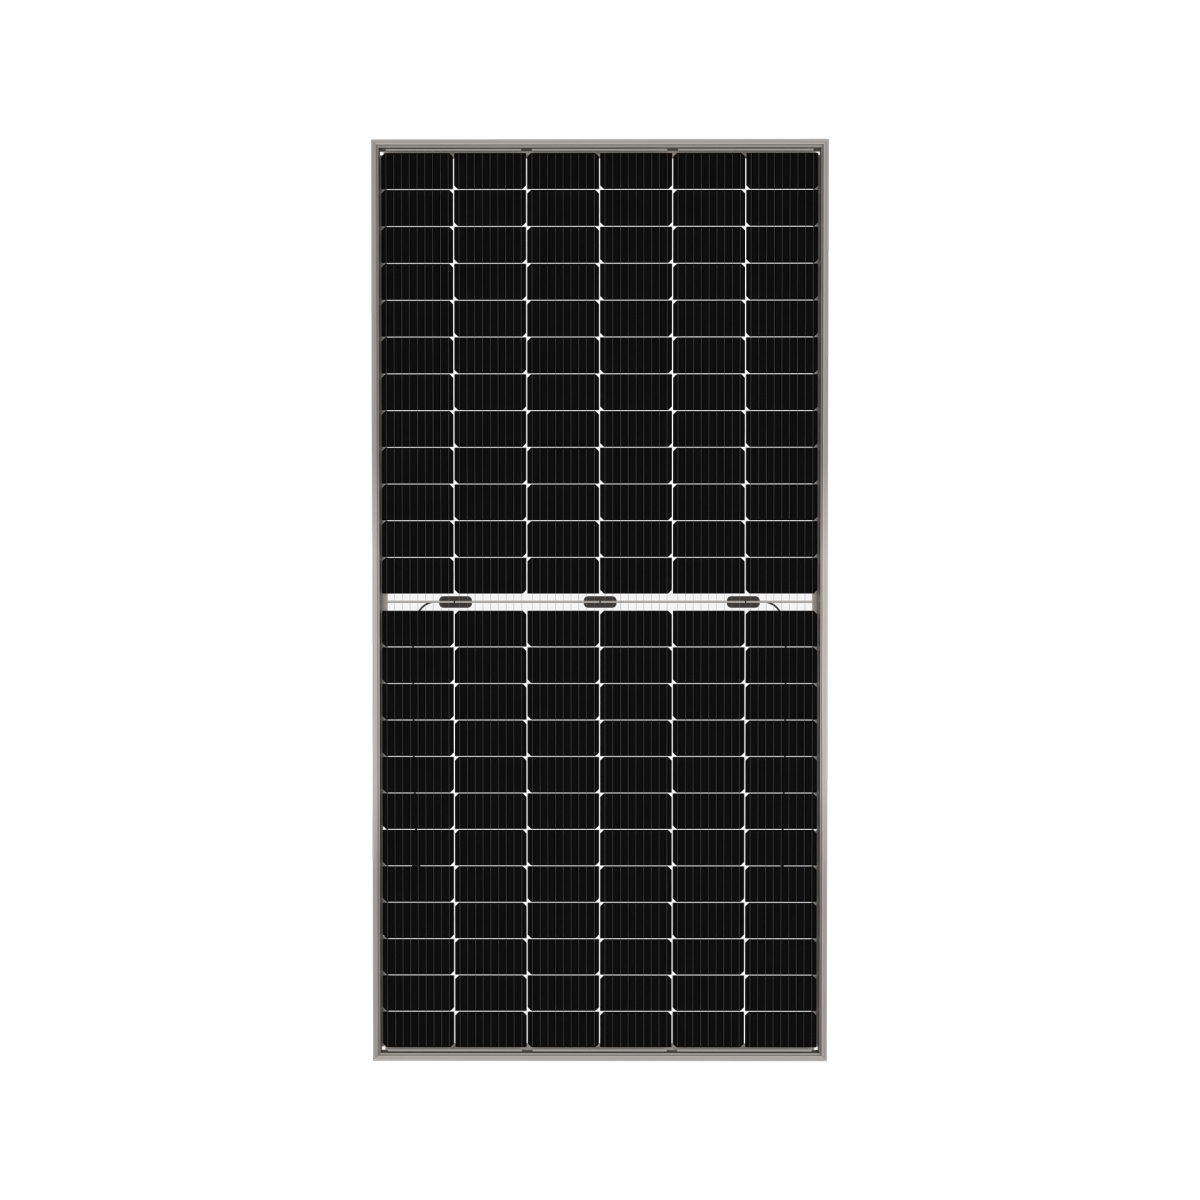 TommaTech 445Wp M6 144PMB HC-MB Solar Panel